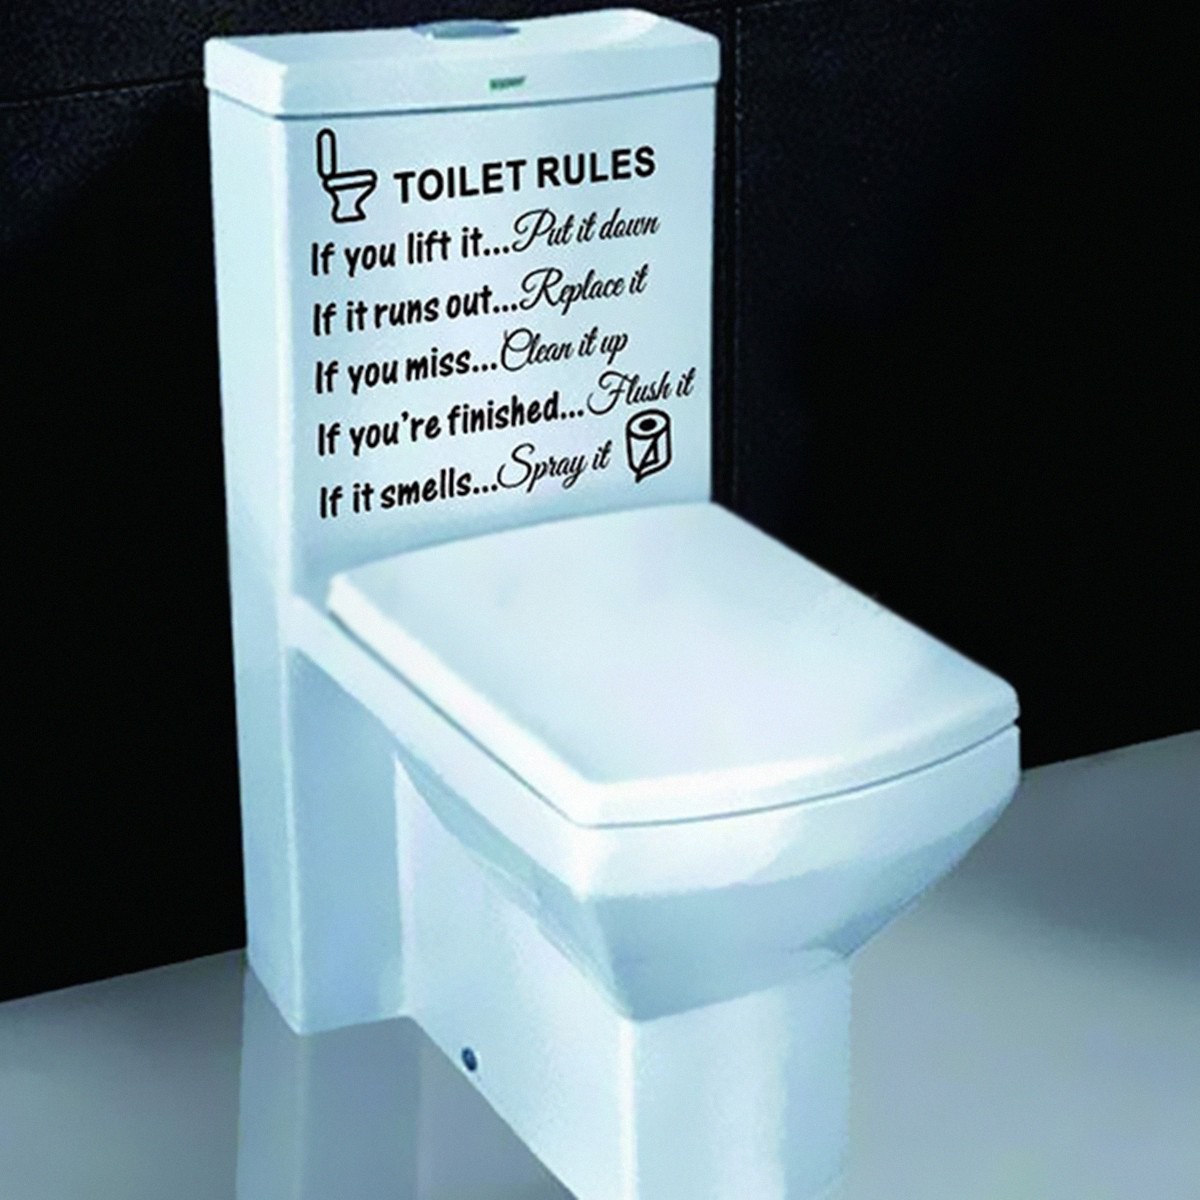 DIY-Toilet-Rules-Bathroom-Toilet-Wall-Sticker-Vinyl-Art-Decals-Home-Office-Decoration-1722046-5